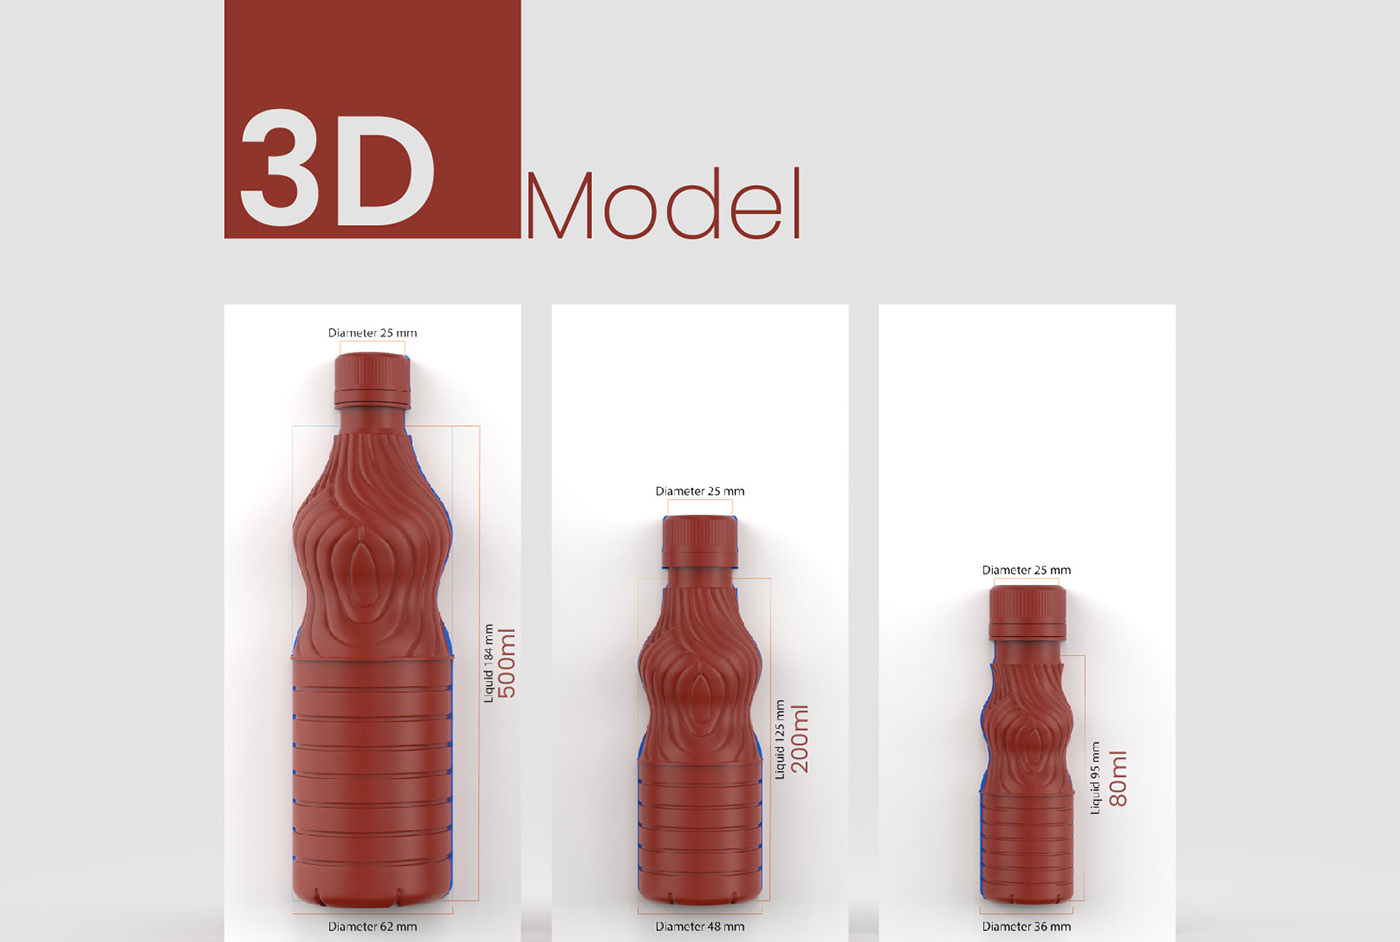 ARKU Mustard Oil Cooking Oil 3d modeling Render 3D portfolio cooking oil packaging oil